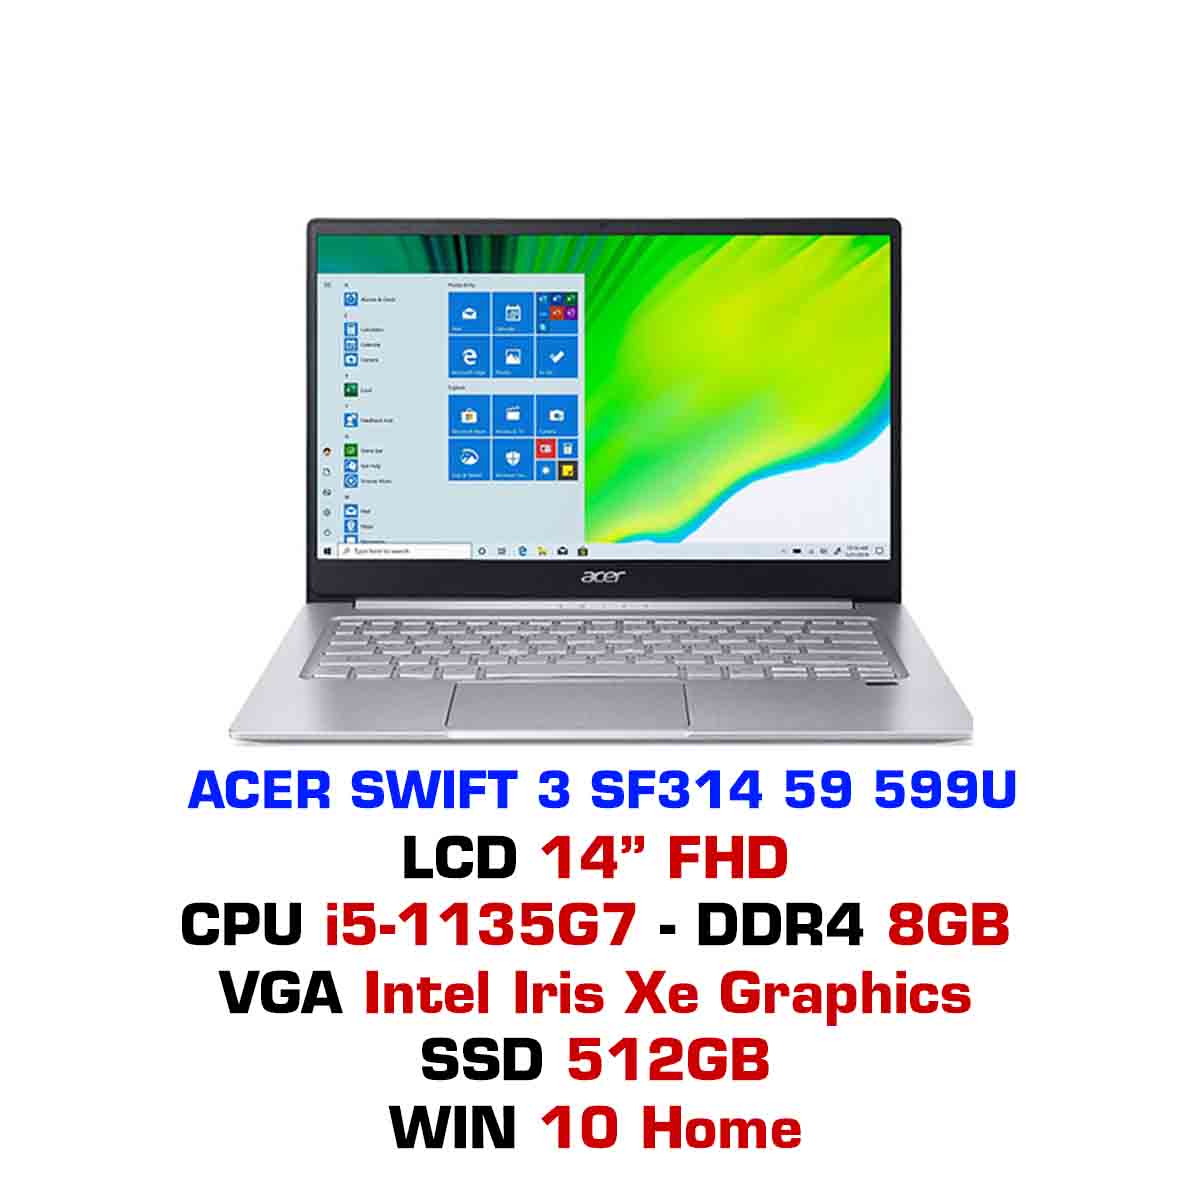 LAPTOP ACER SWIFT 3 SF314 59 599U chính hãng, giá rẻ – GEARVN.COM